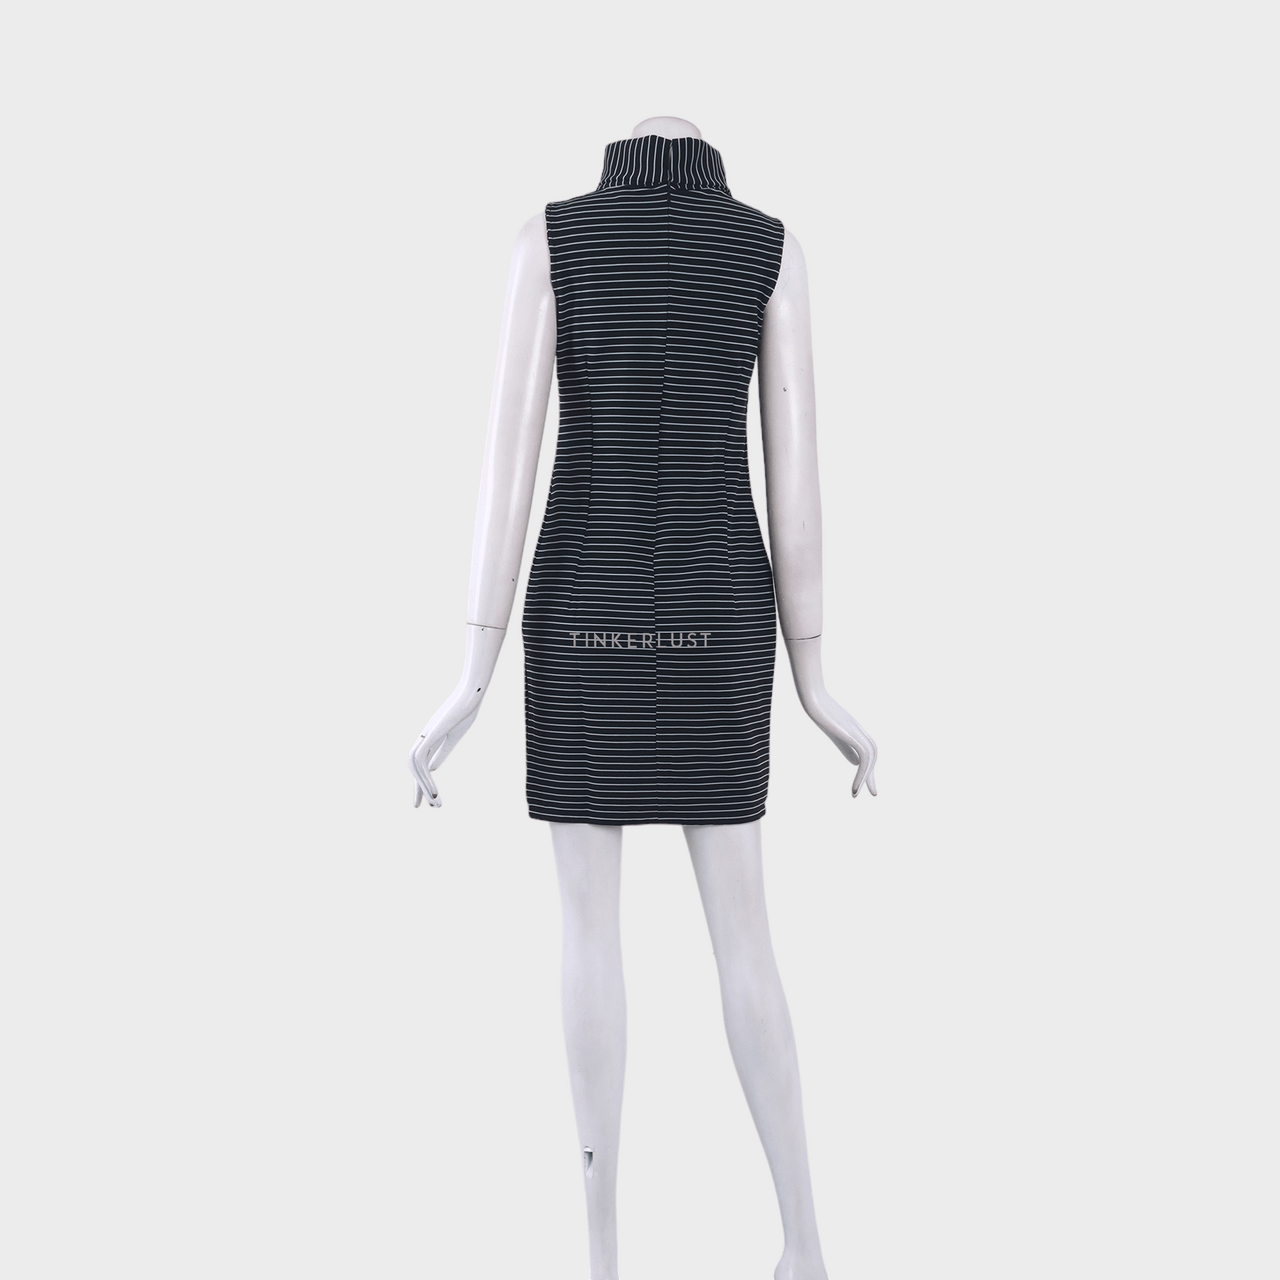 Lookboutiquestore Black & White Stripes Mini Dress